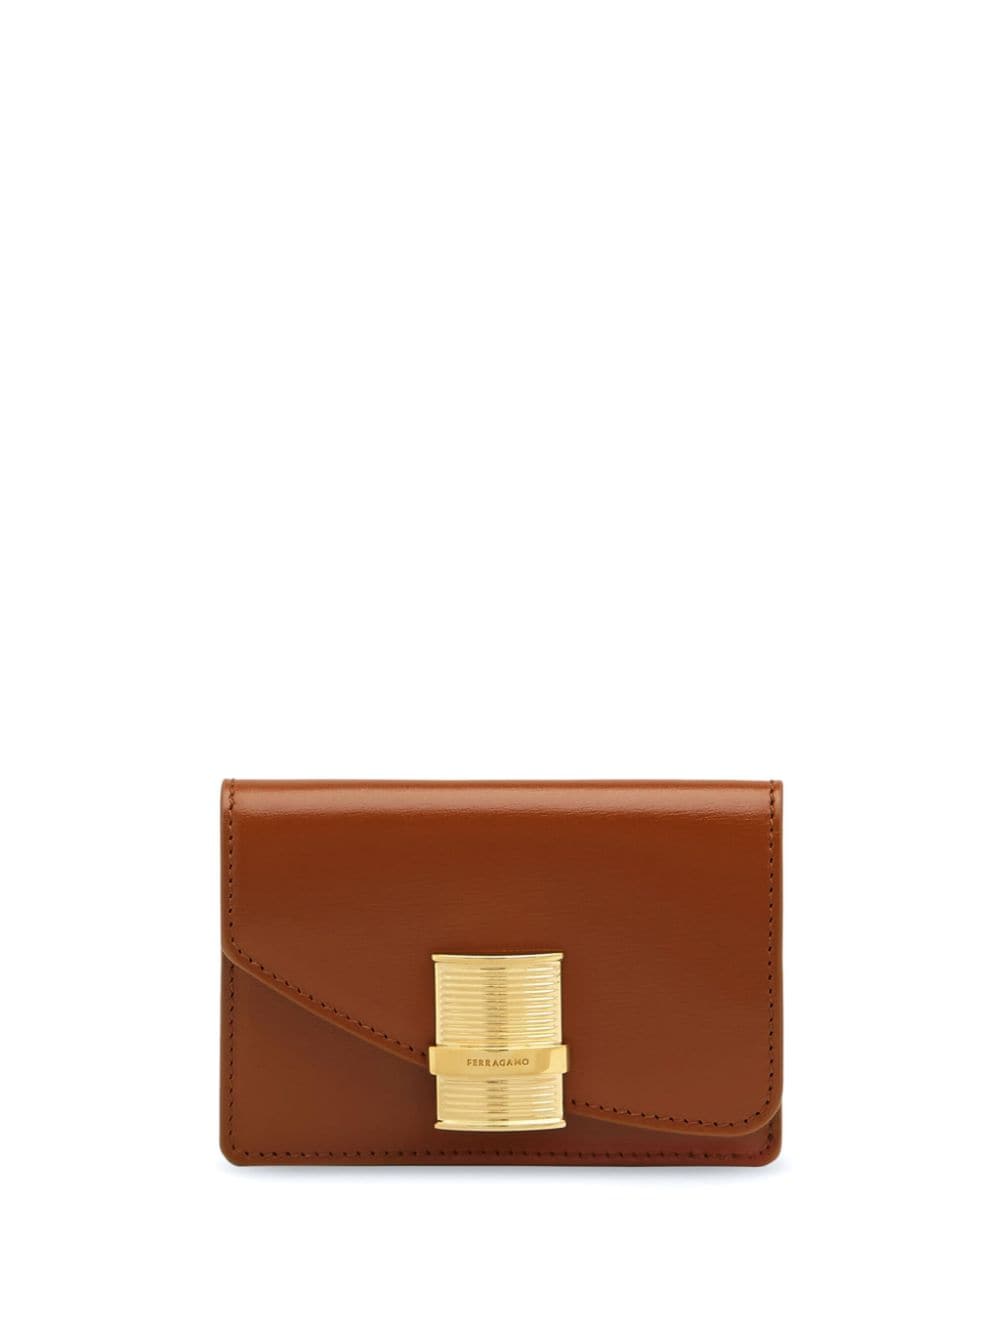 Ferragamo Fiamma compact wallet - Brown von Ferragamo